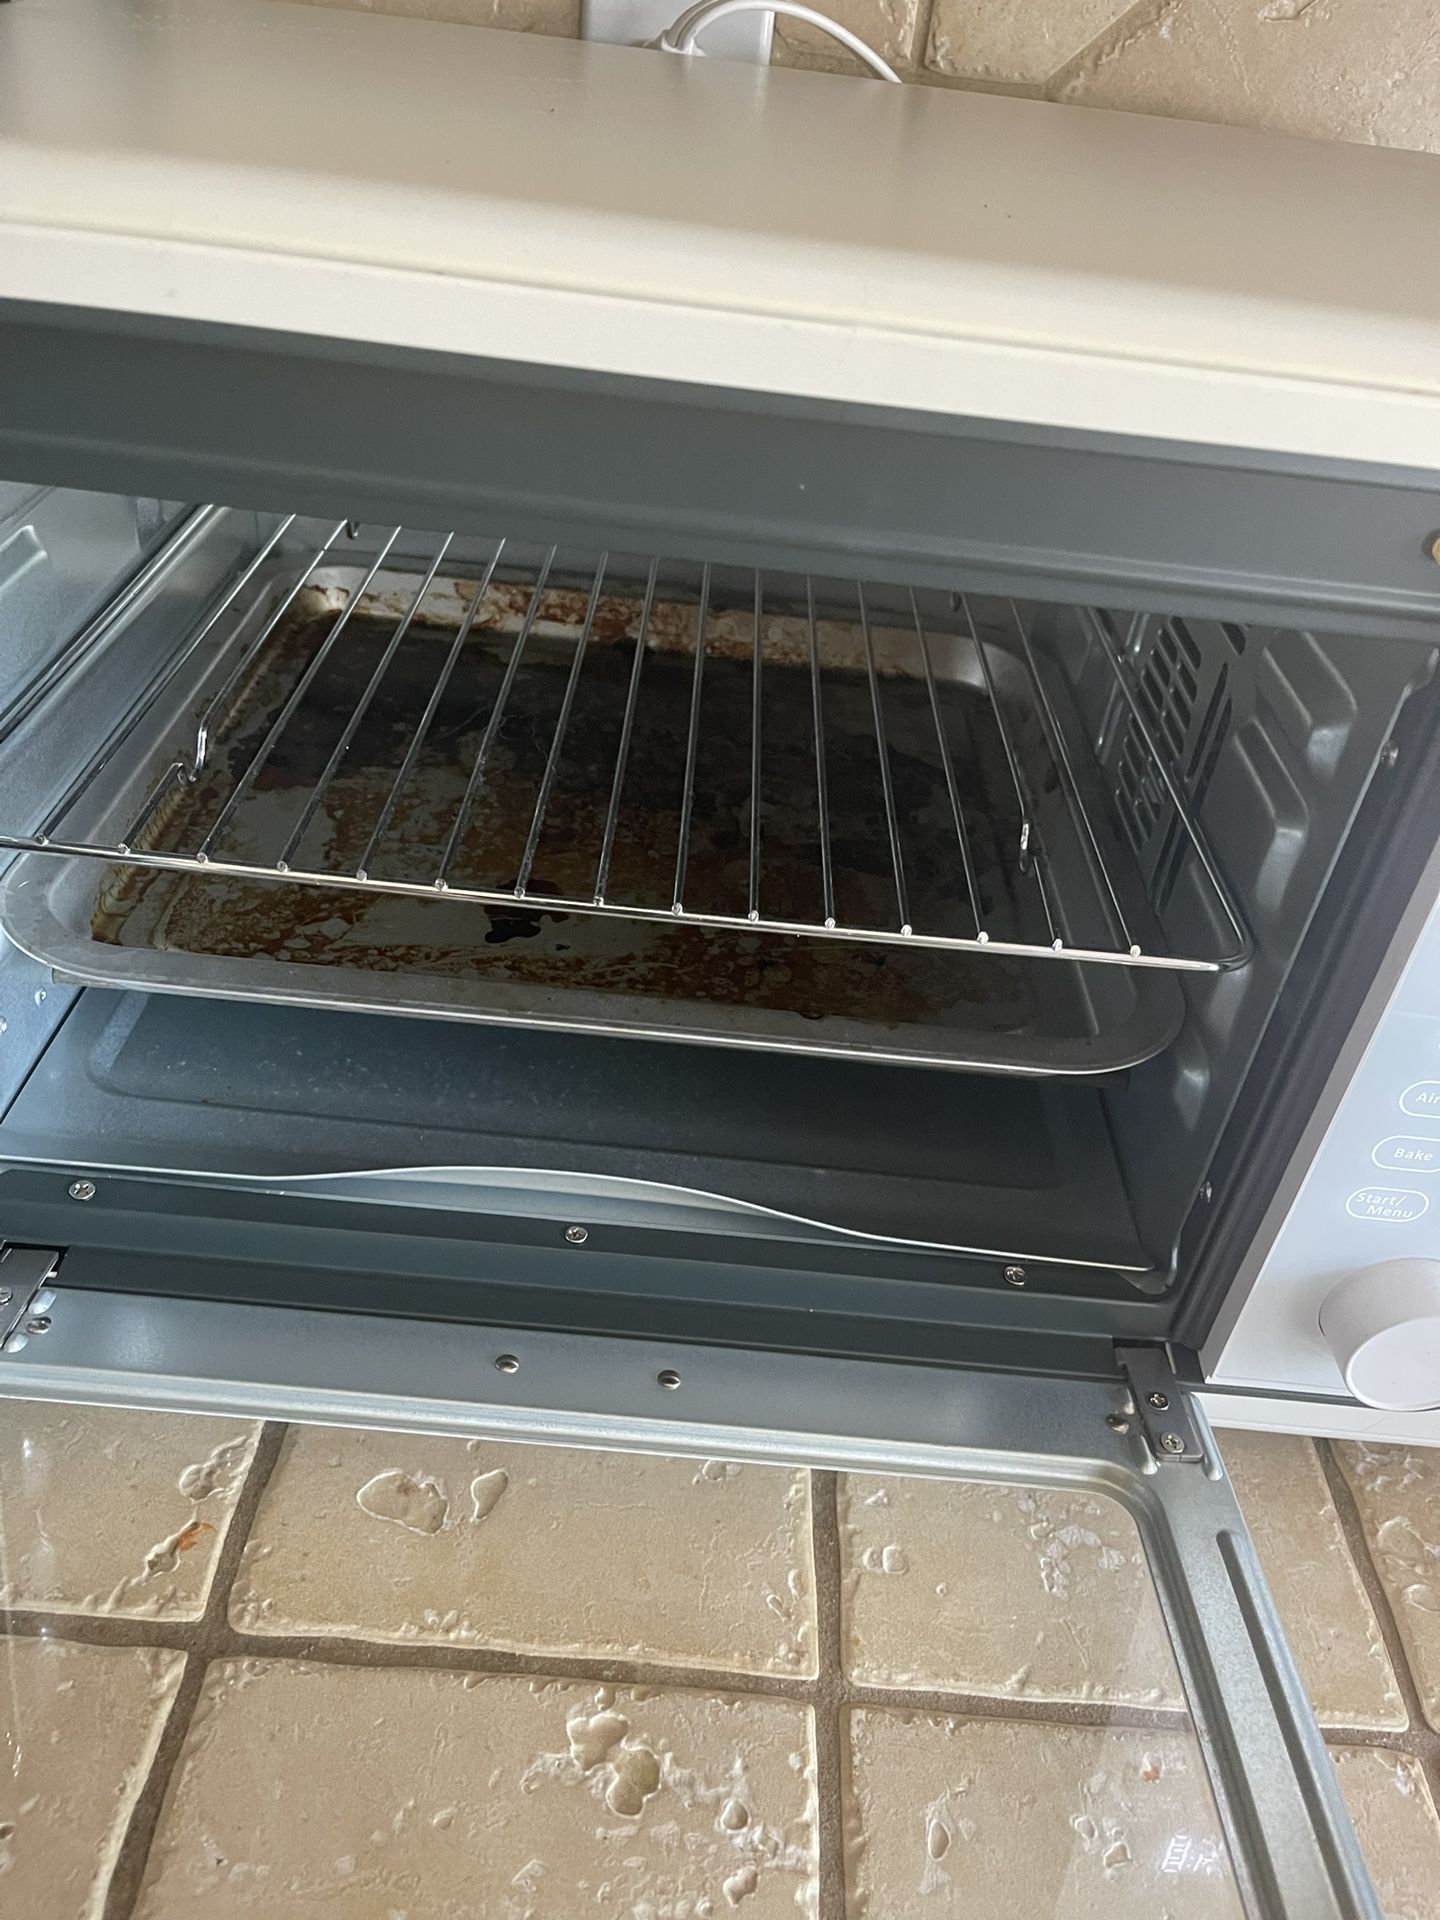 Drew Barrymore Beautiful Air Fryer Toaster Oven for Sale in Phoenix, AZ -  OfferUp